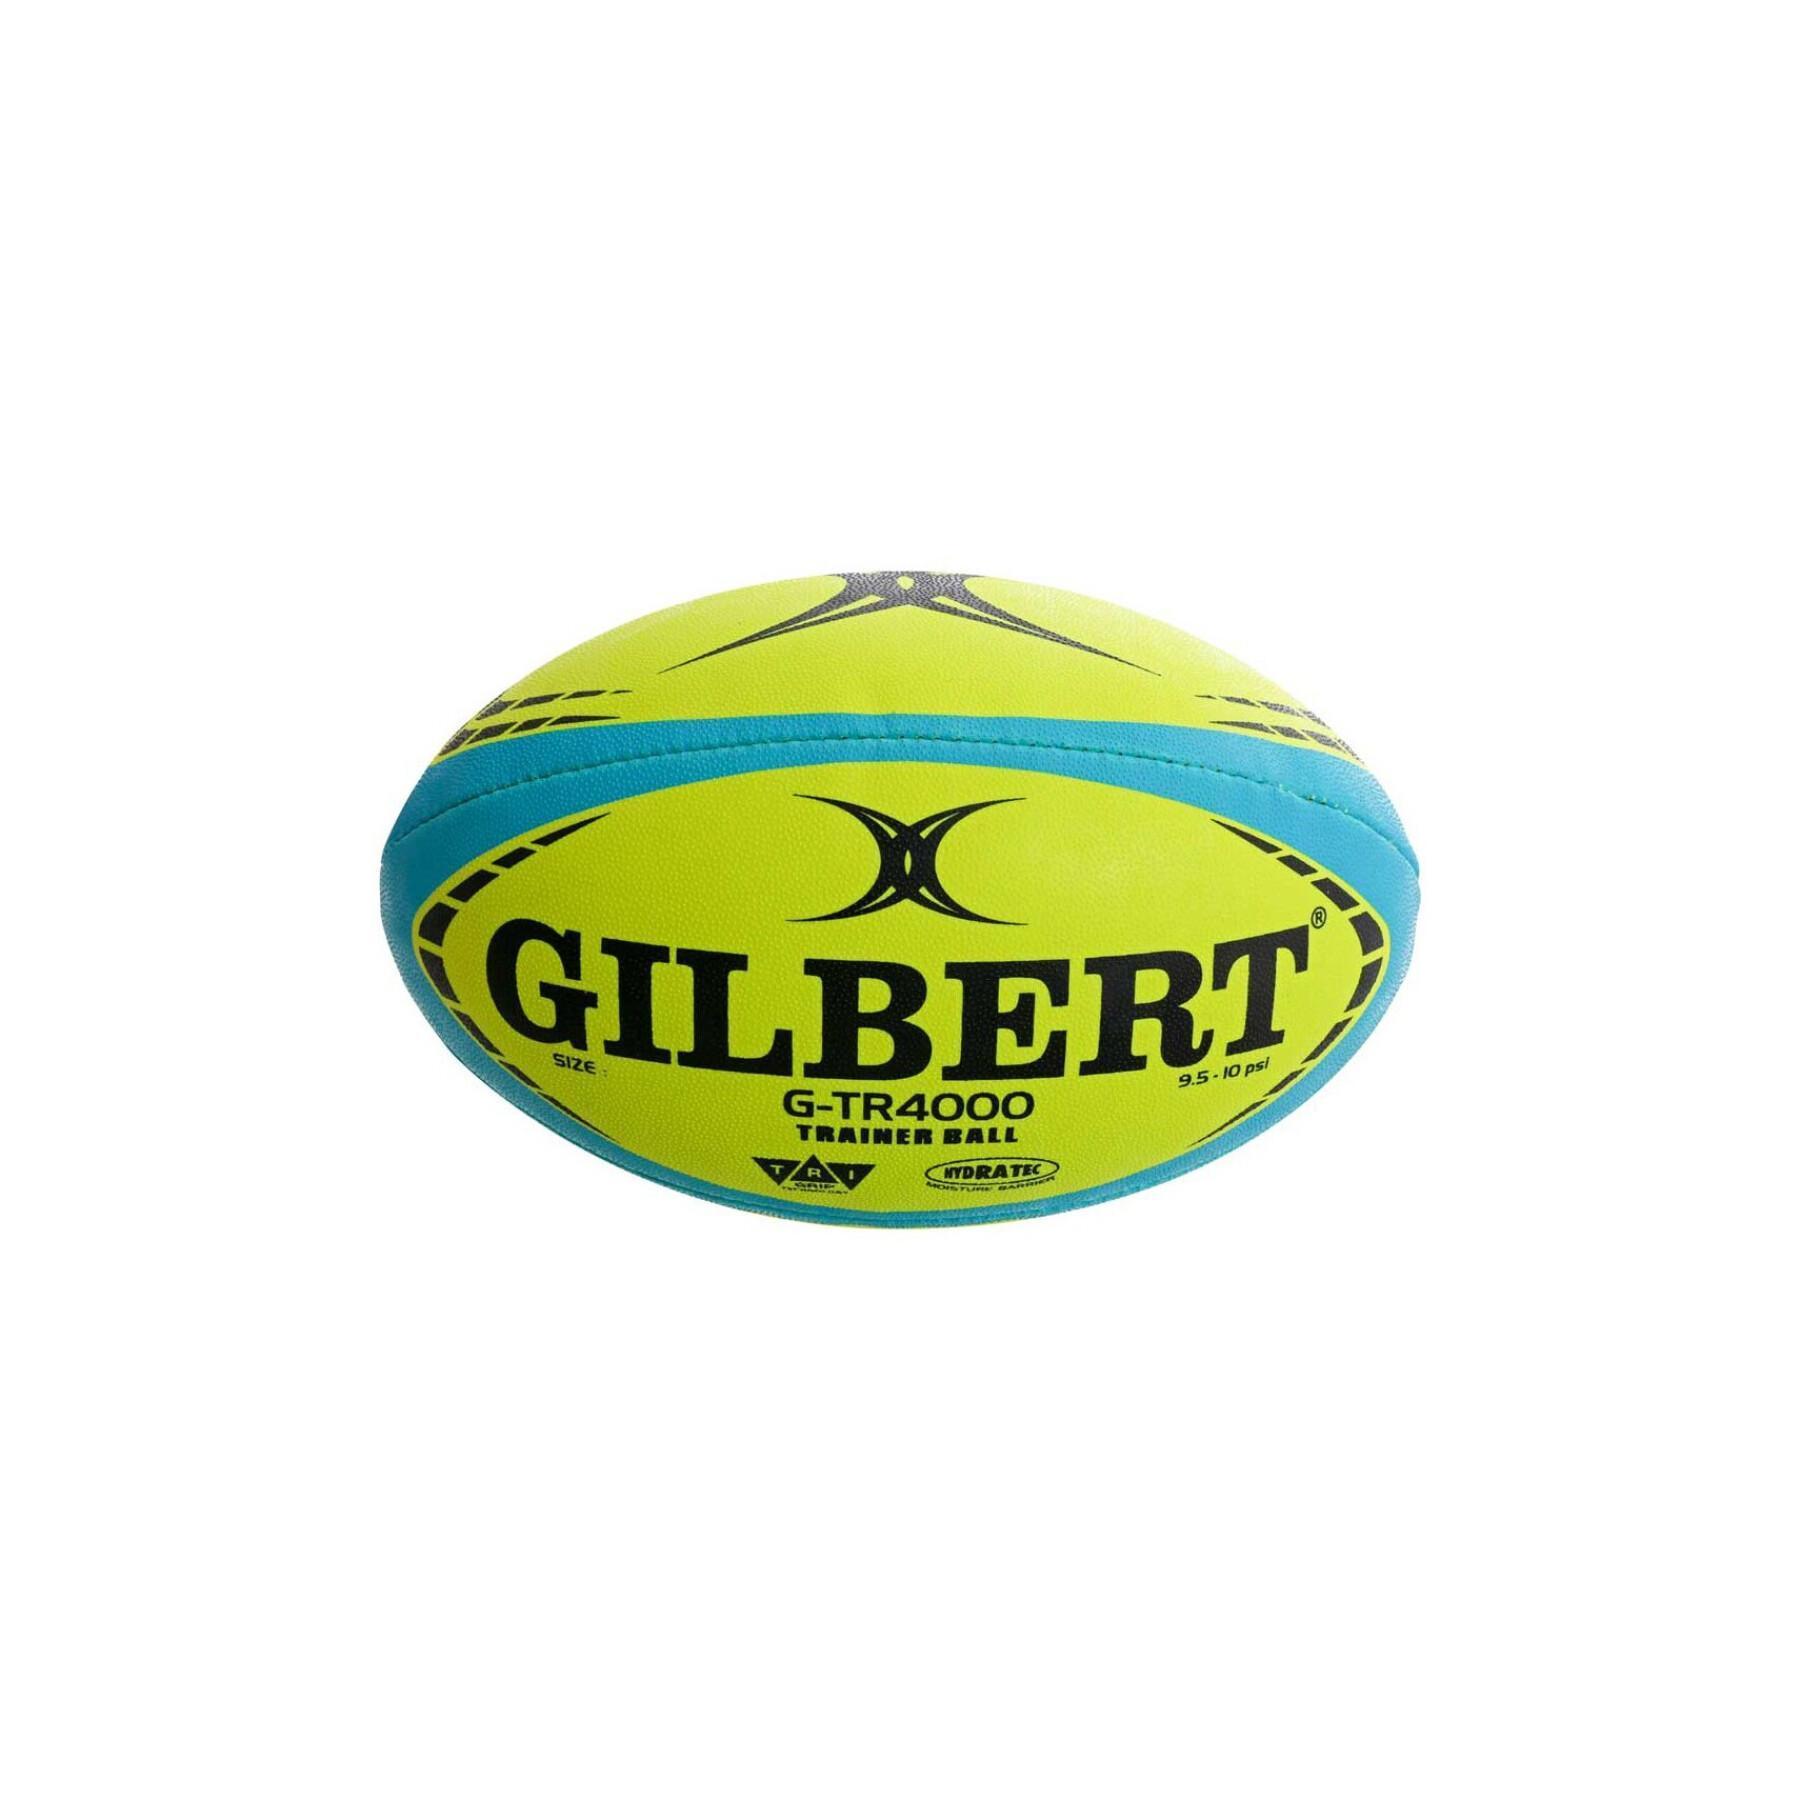 Balón de rugby Gilbert G-TR4000 Trainer Fluo (talla 4)